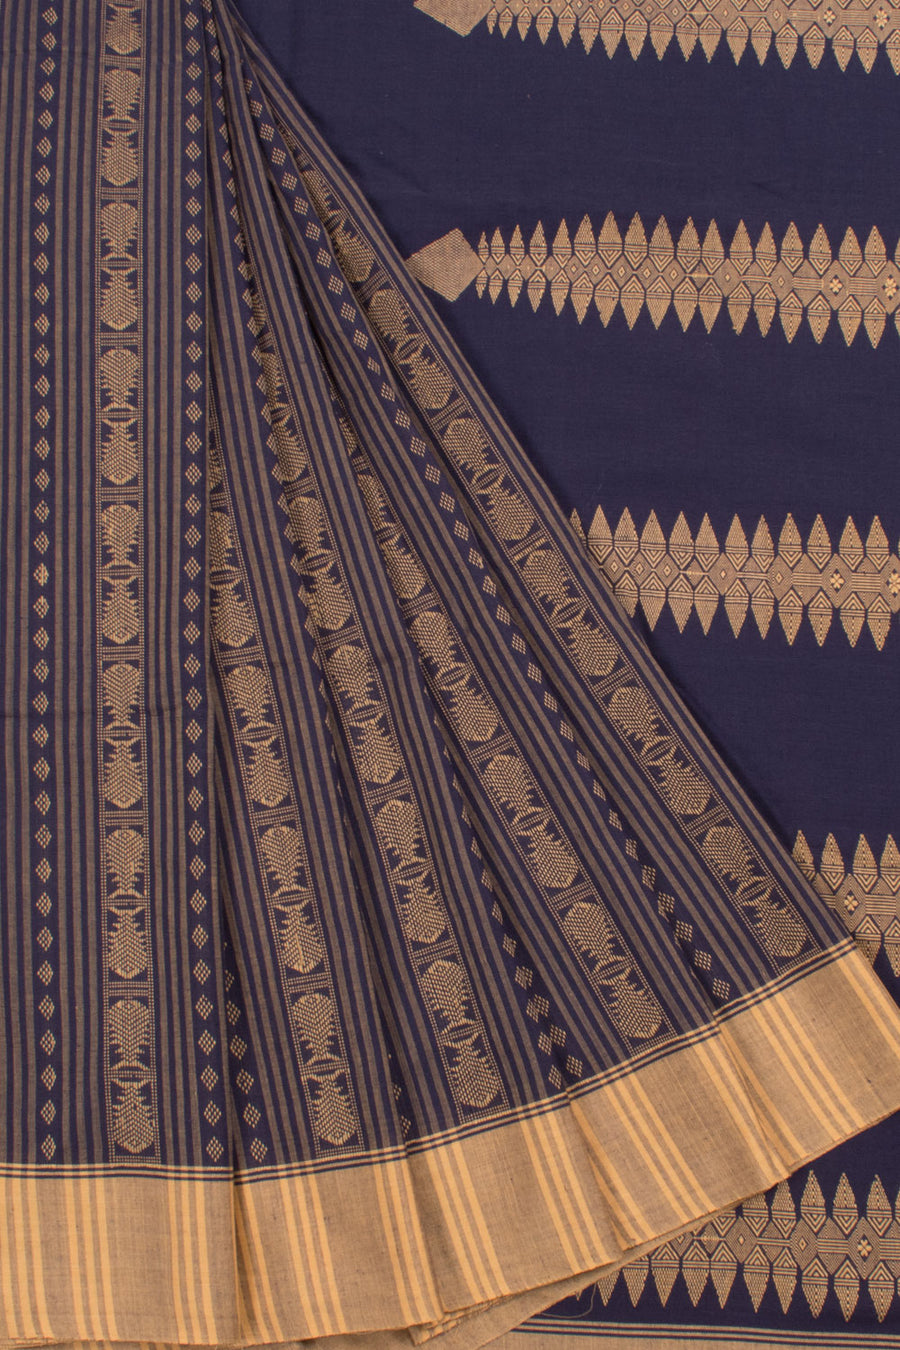 Handloom Bengal Cotton Saree with Fish, Stripes Design